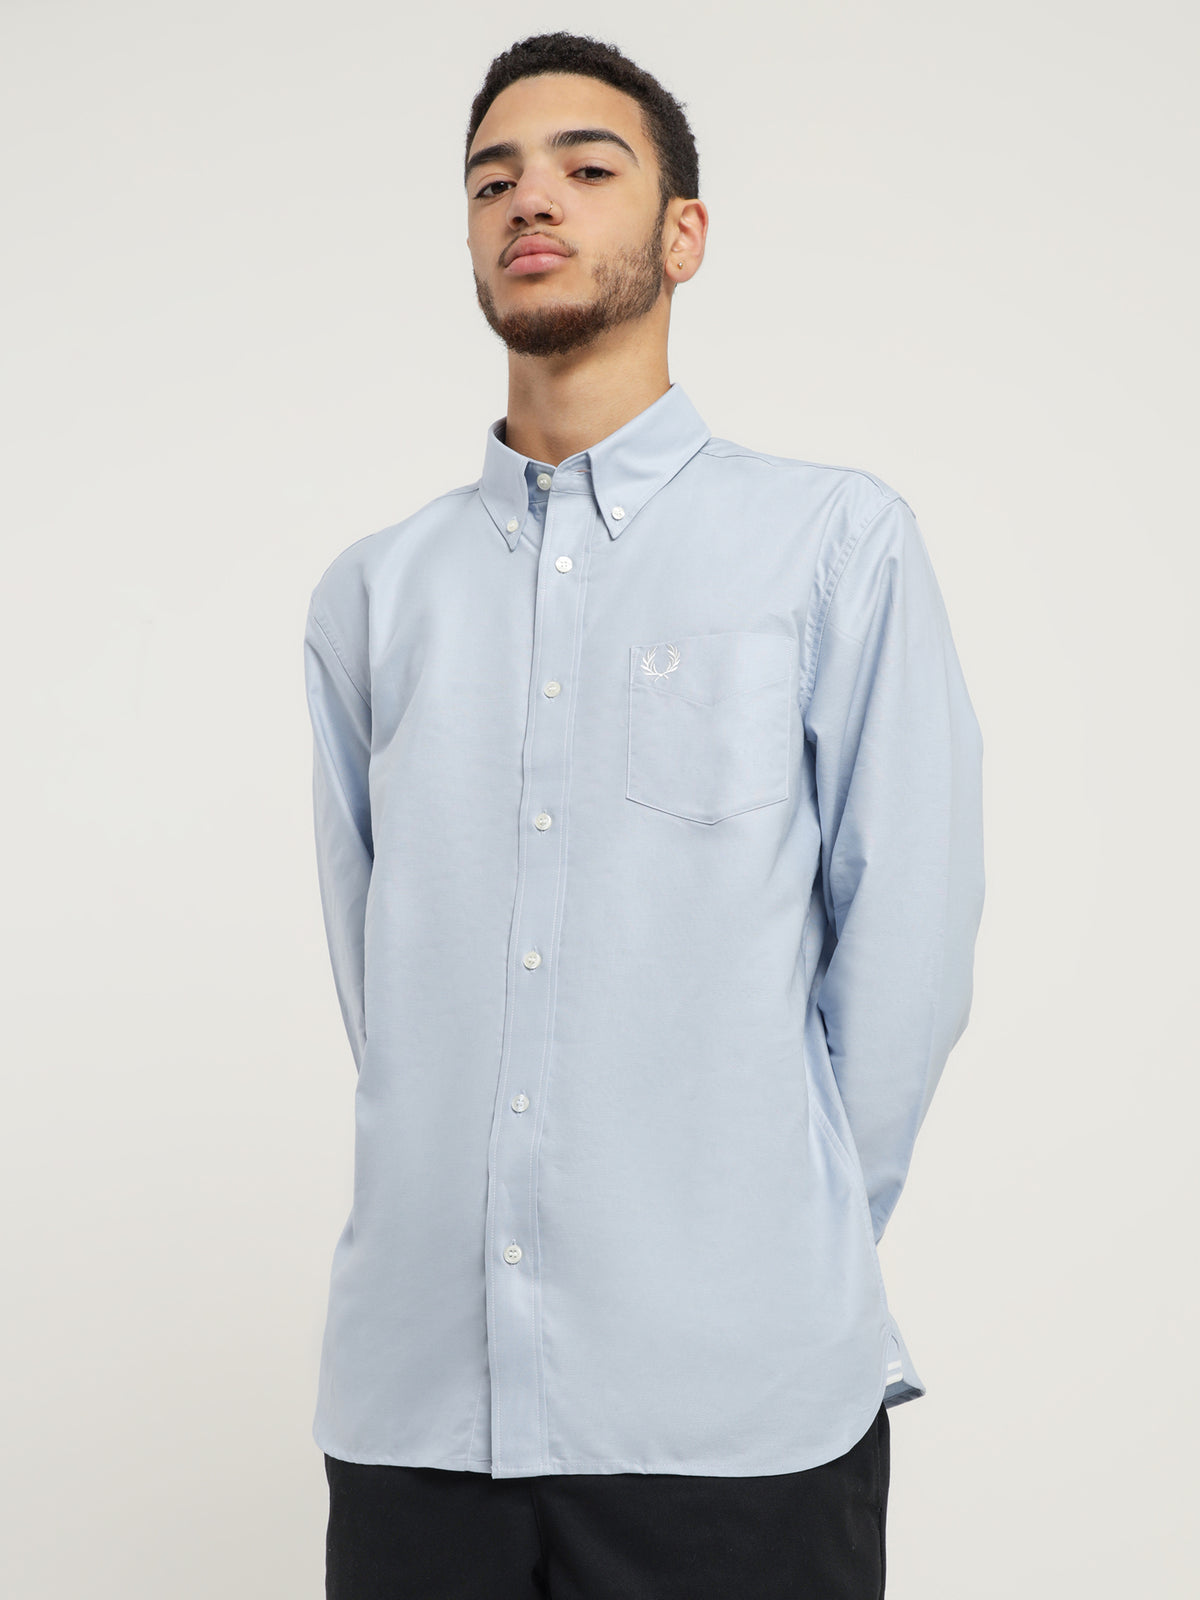 Long Sleeve Oxford Shirt in Smoke Blue